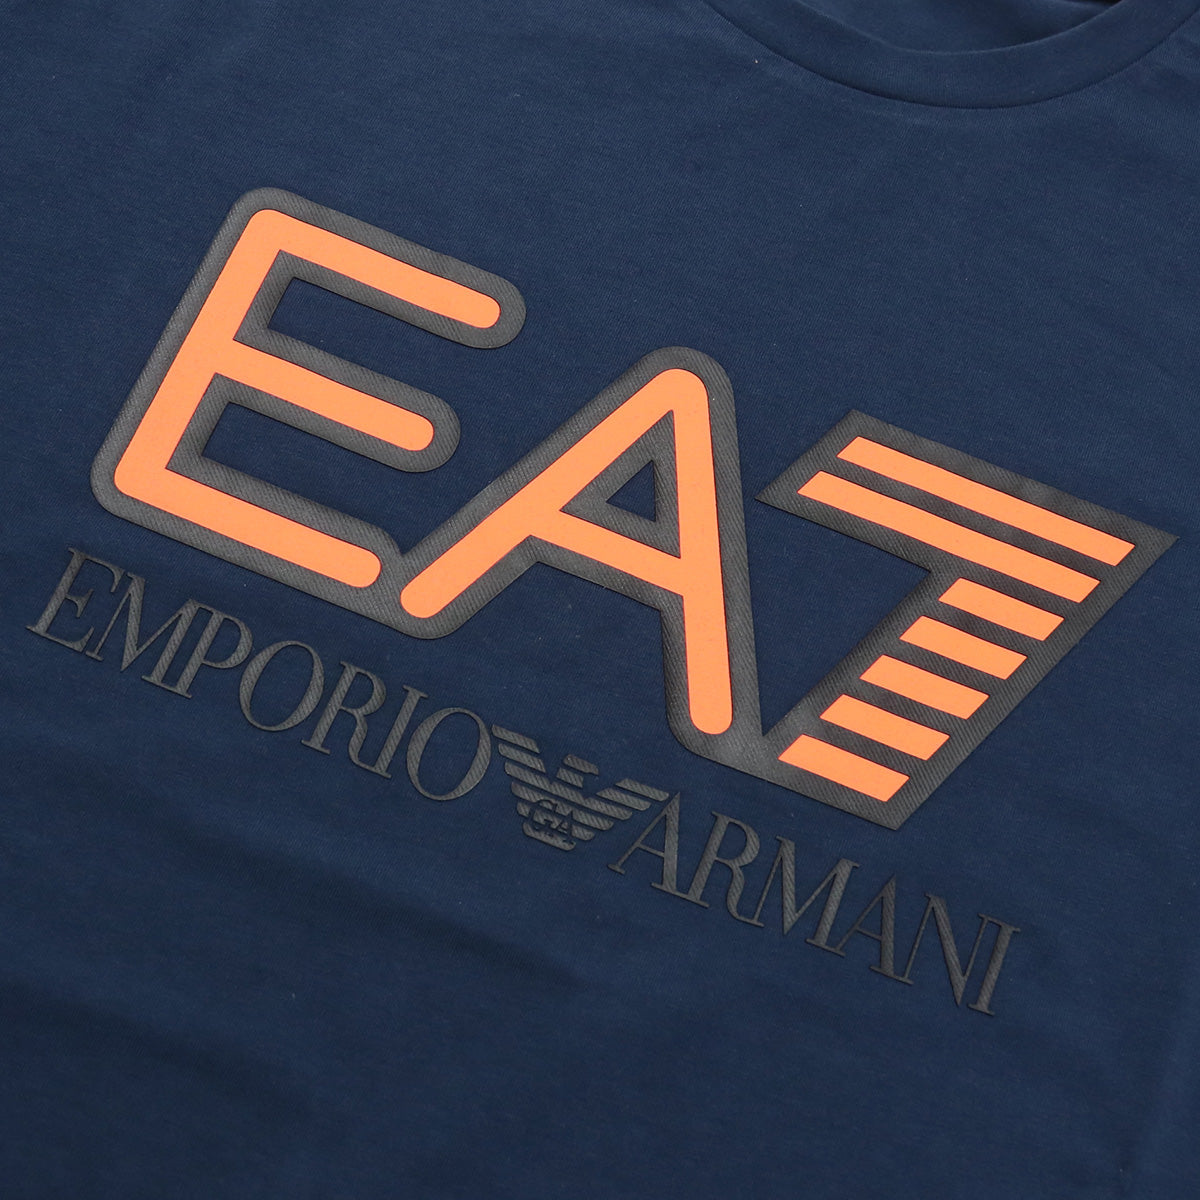 EA7 イーエーセブン 6HPT62 Tシャツ NAVY BLUE ネイビー系 メンズ